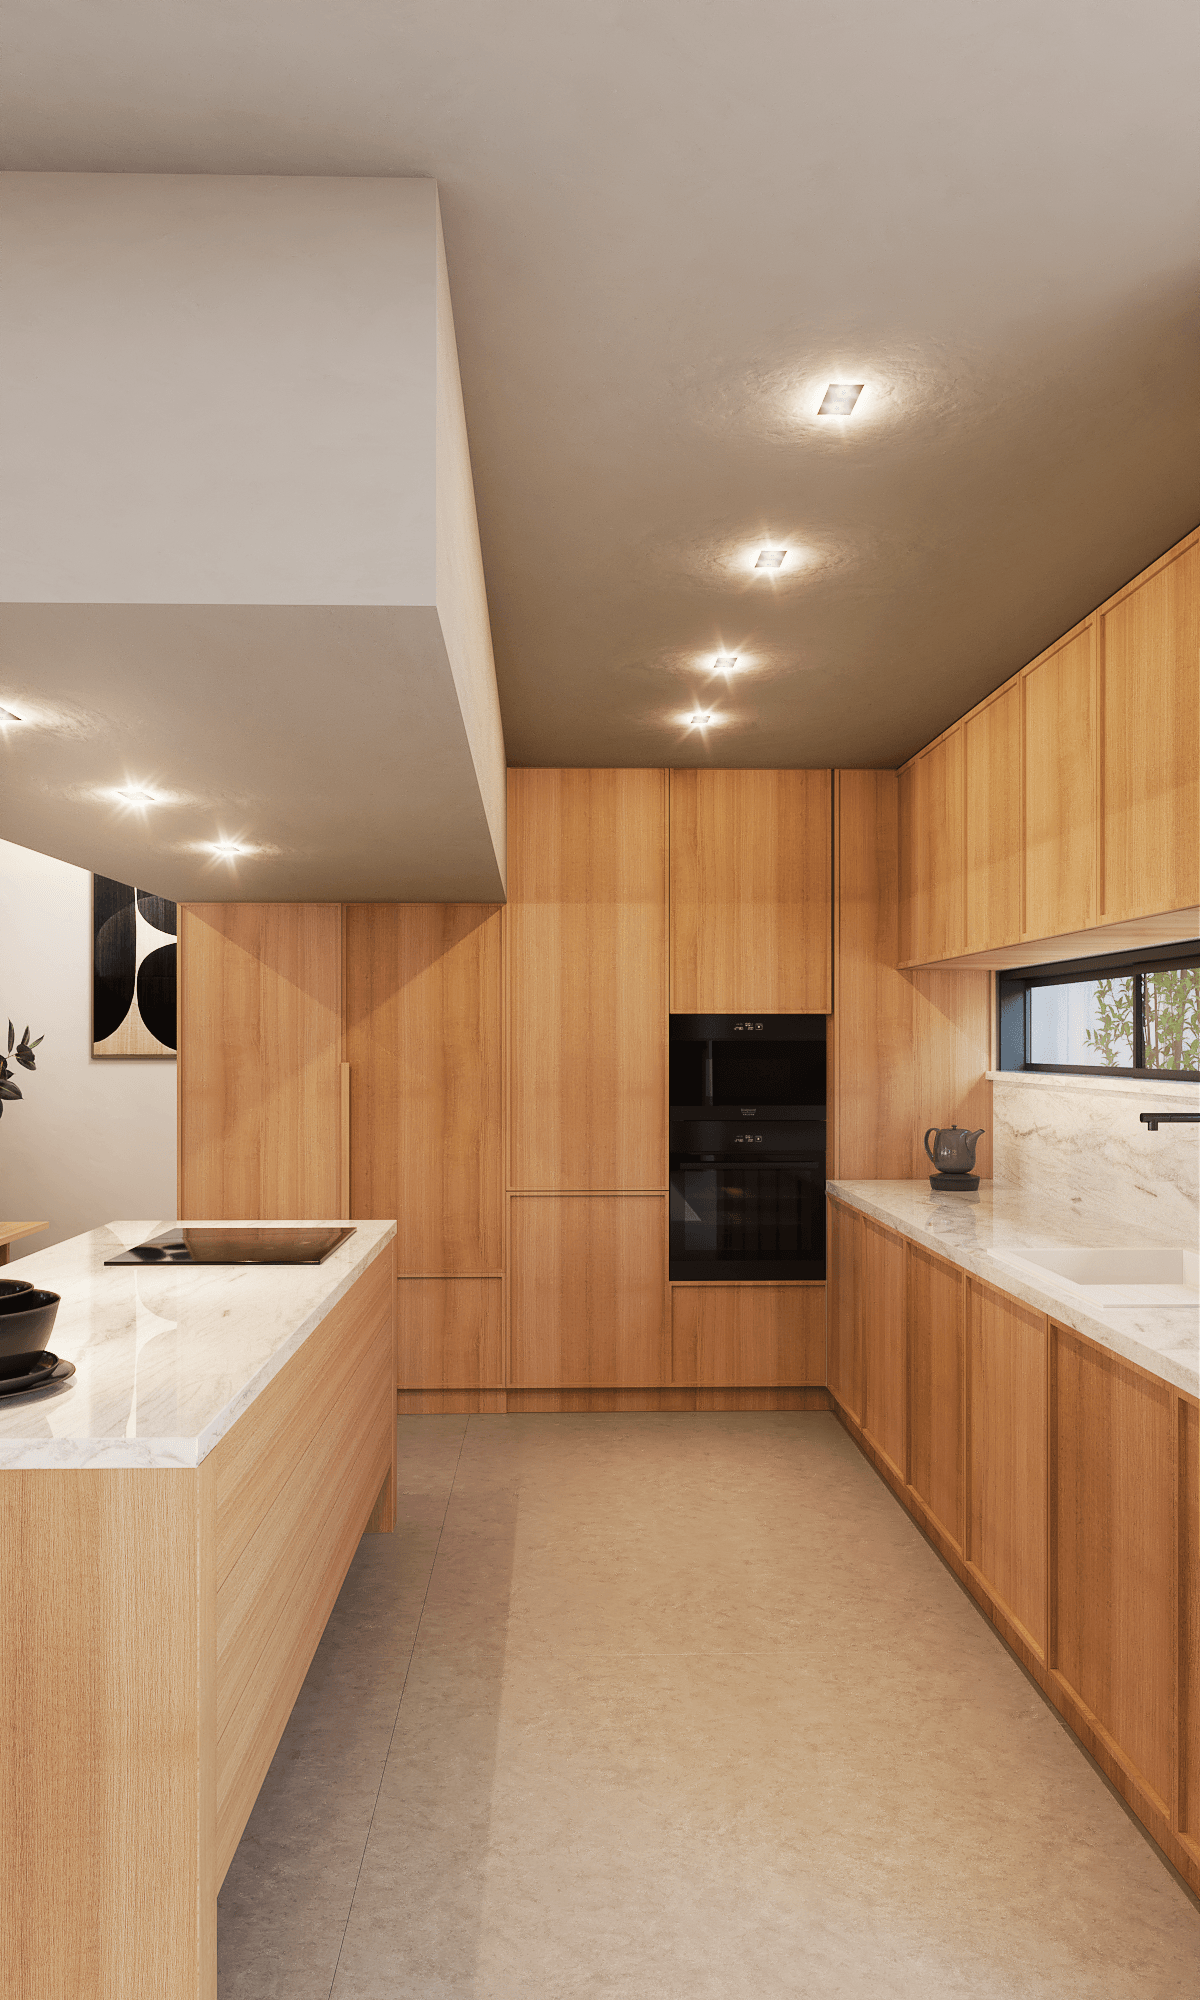 3ds max architecture interior design  visualization Render 3D vray archviz Interior design